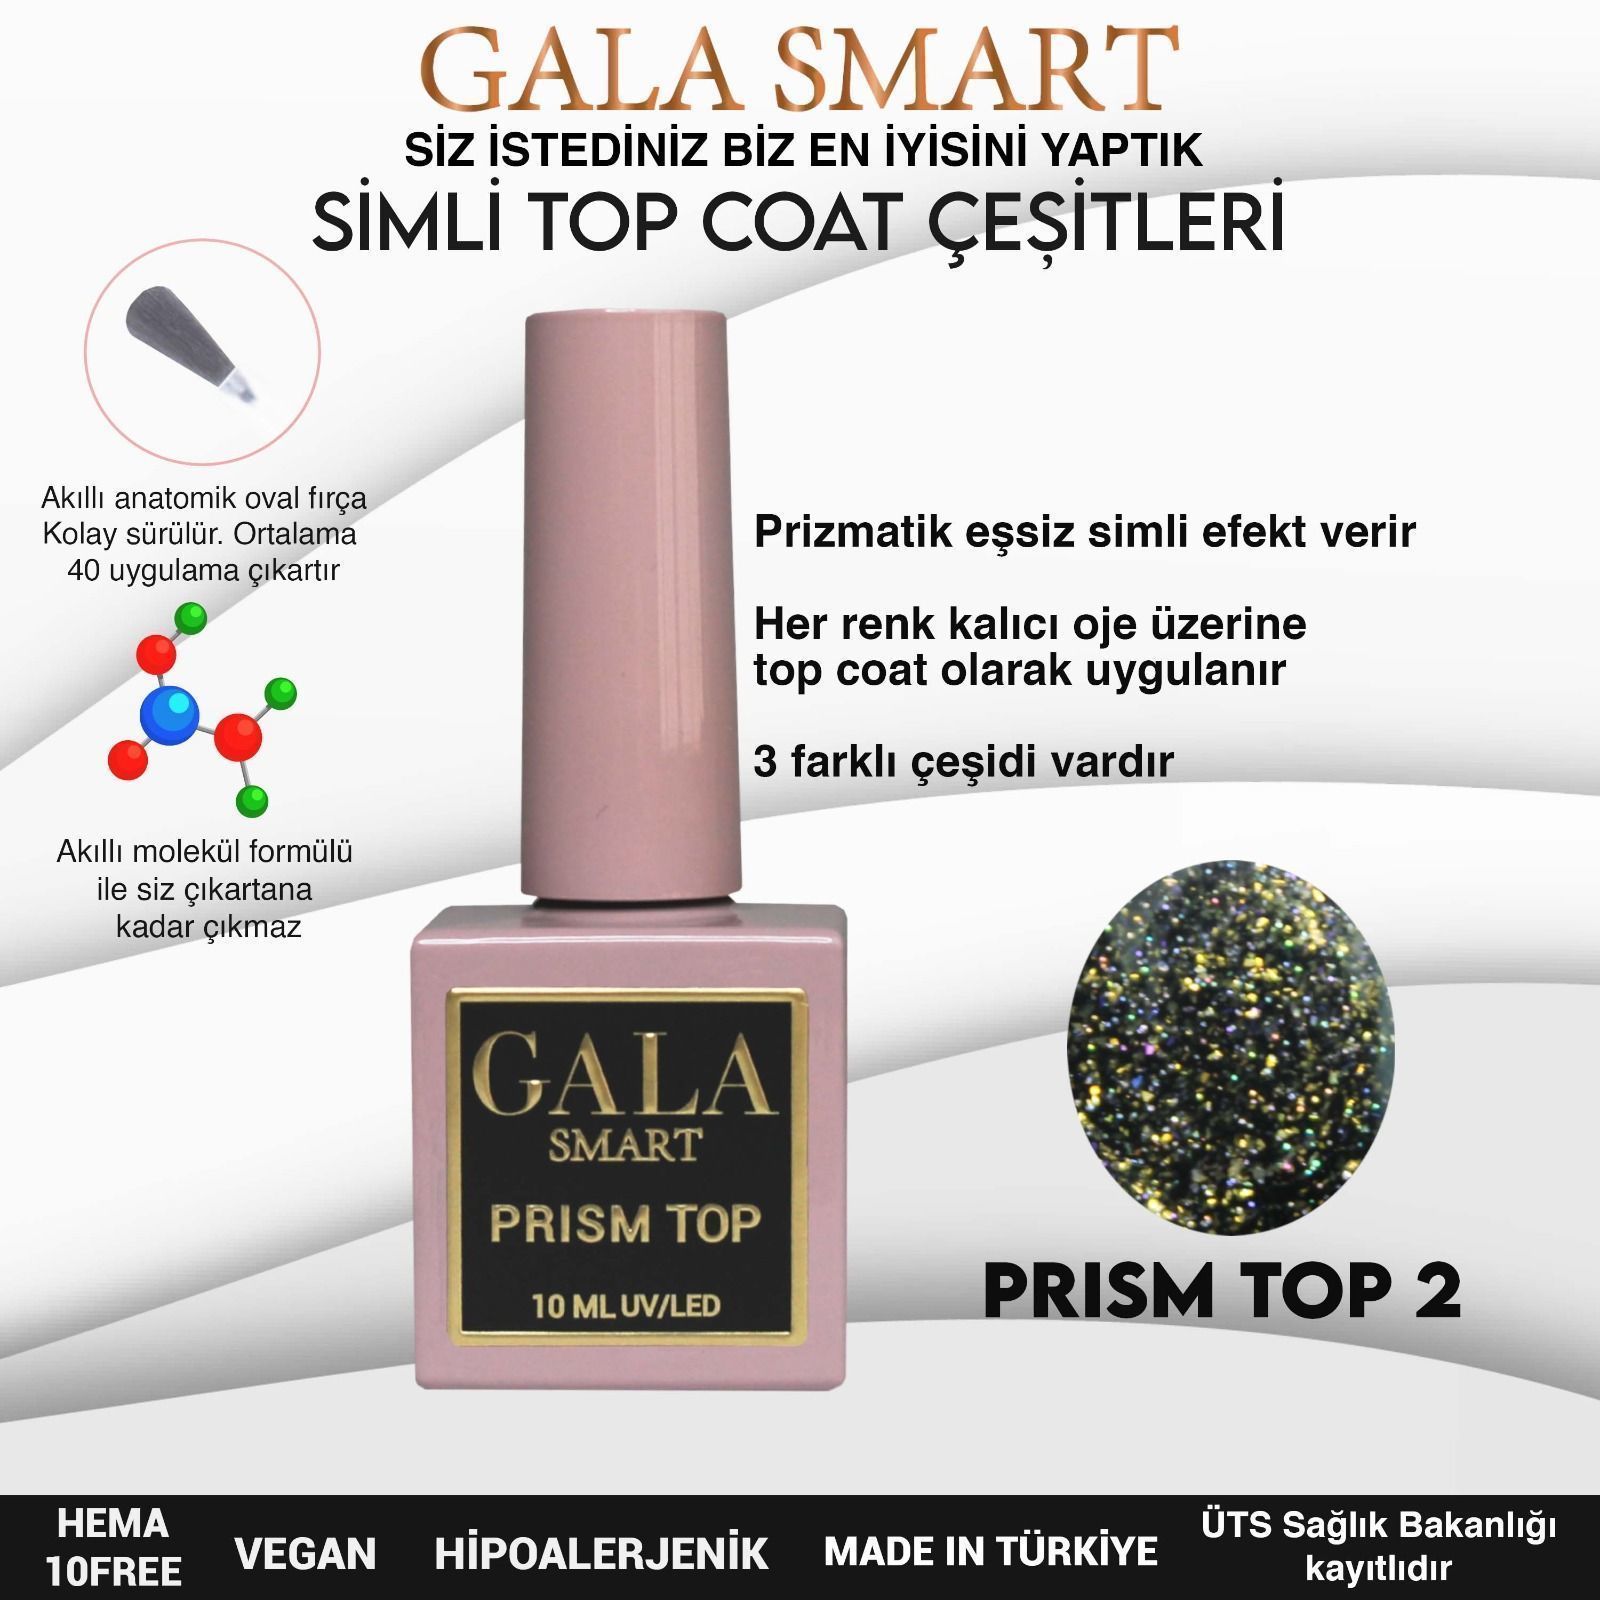 GALA SMART PRISM TOP NO:2 10 mle